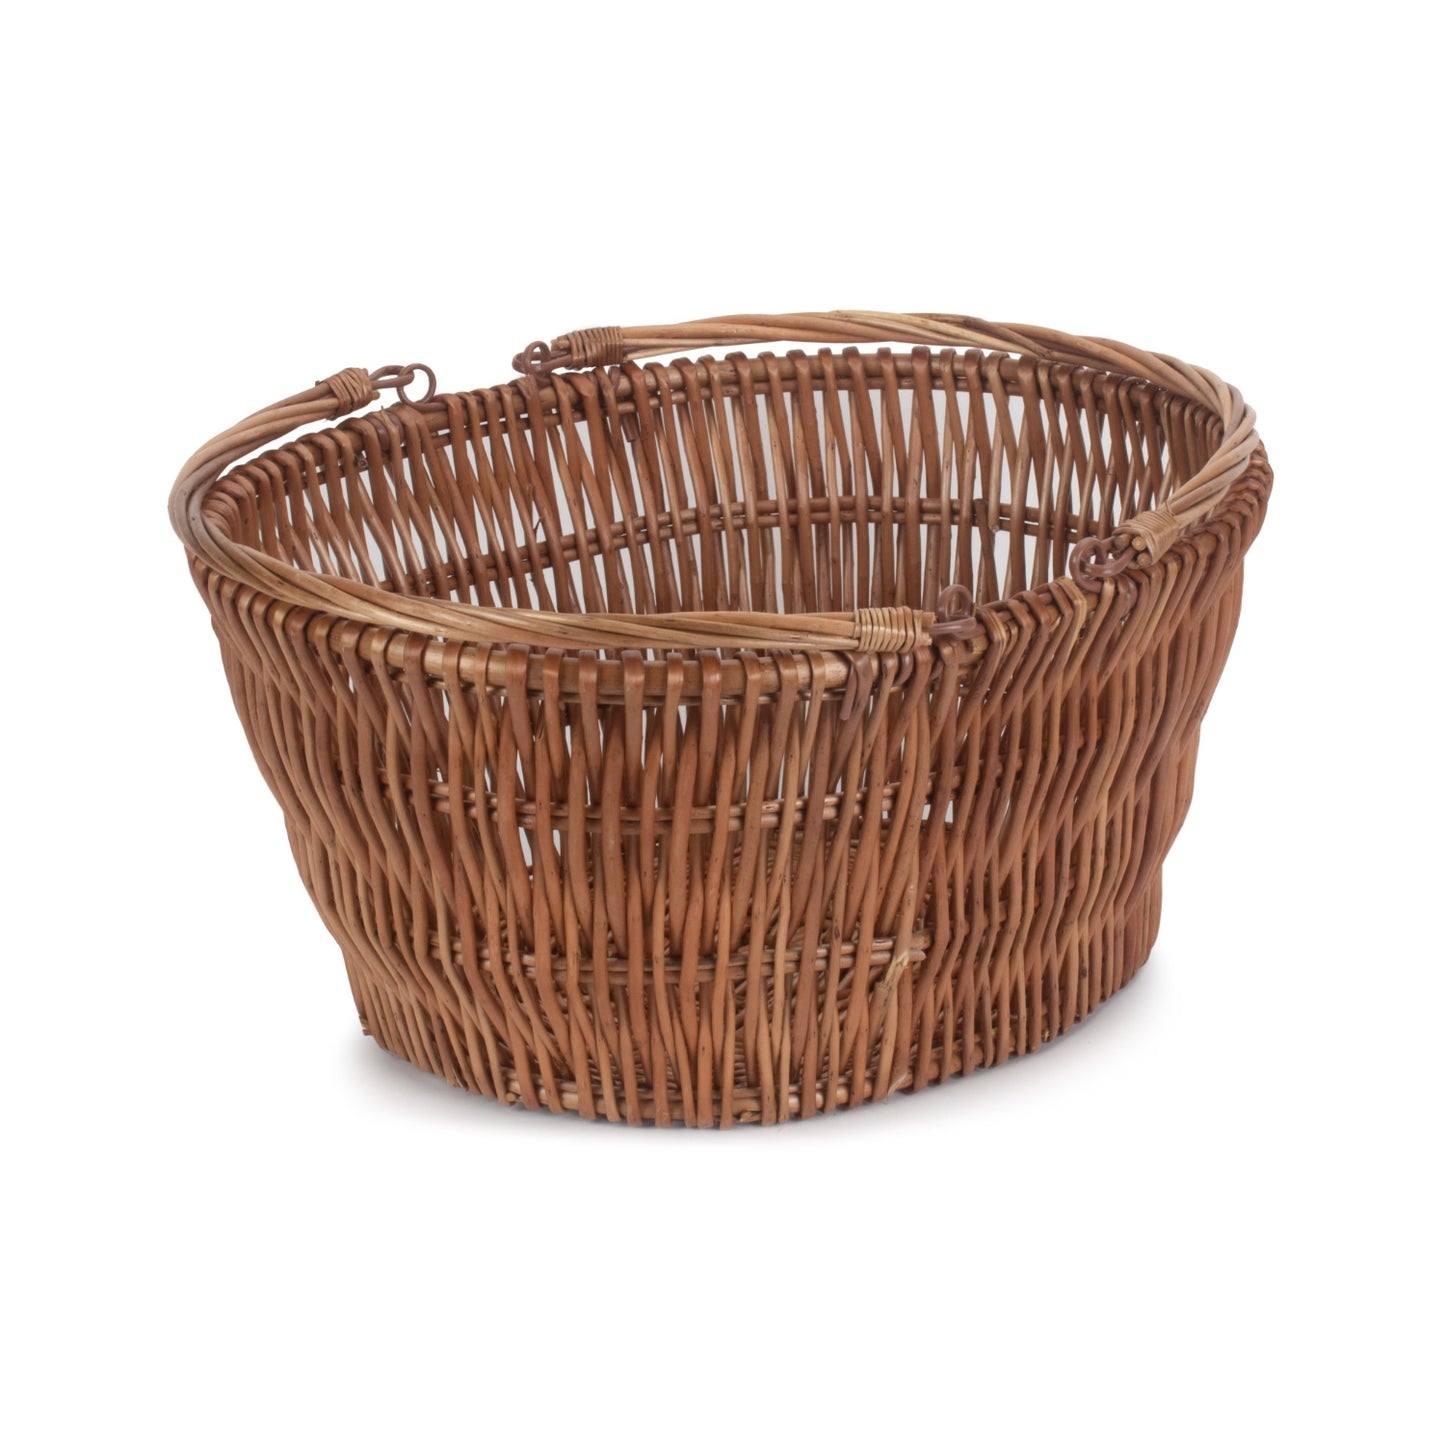 Chatsworth Market Basket